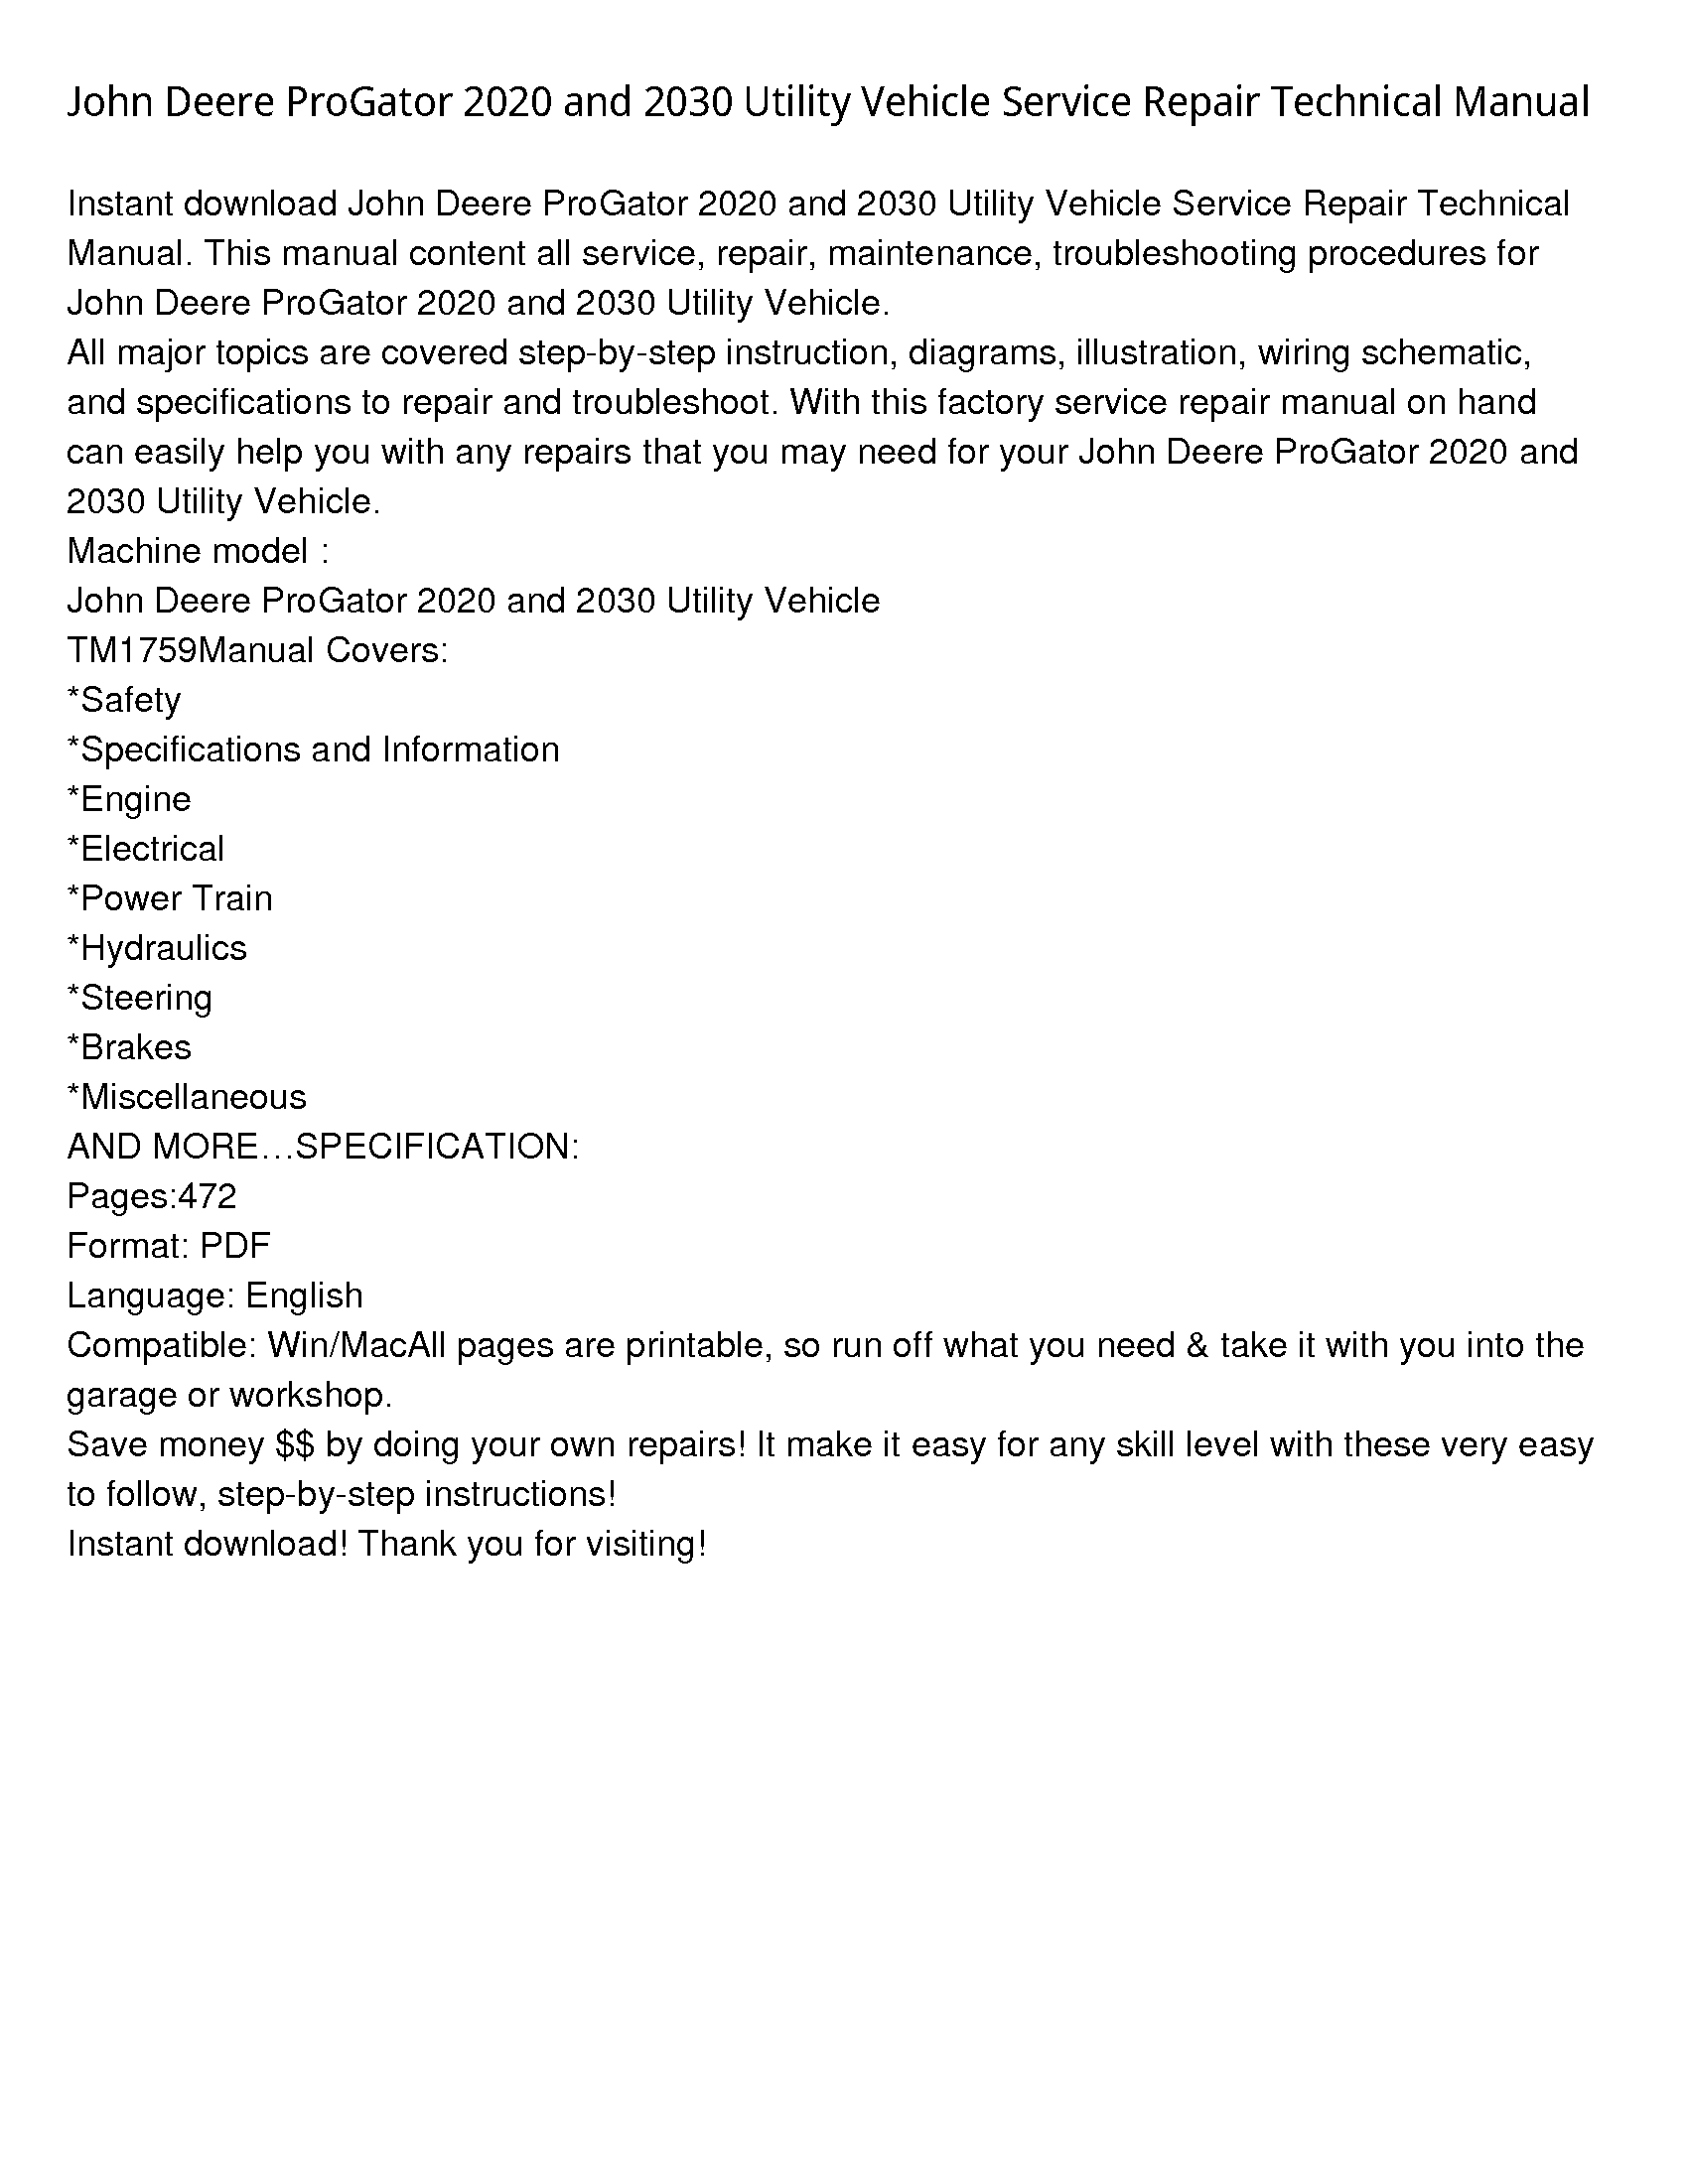 John Deere 2020 ProGator  Utility Vehicle manual